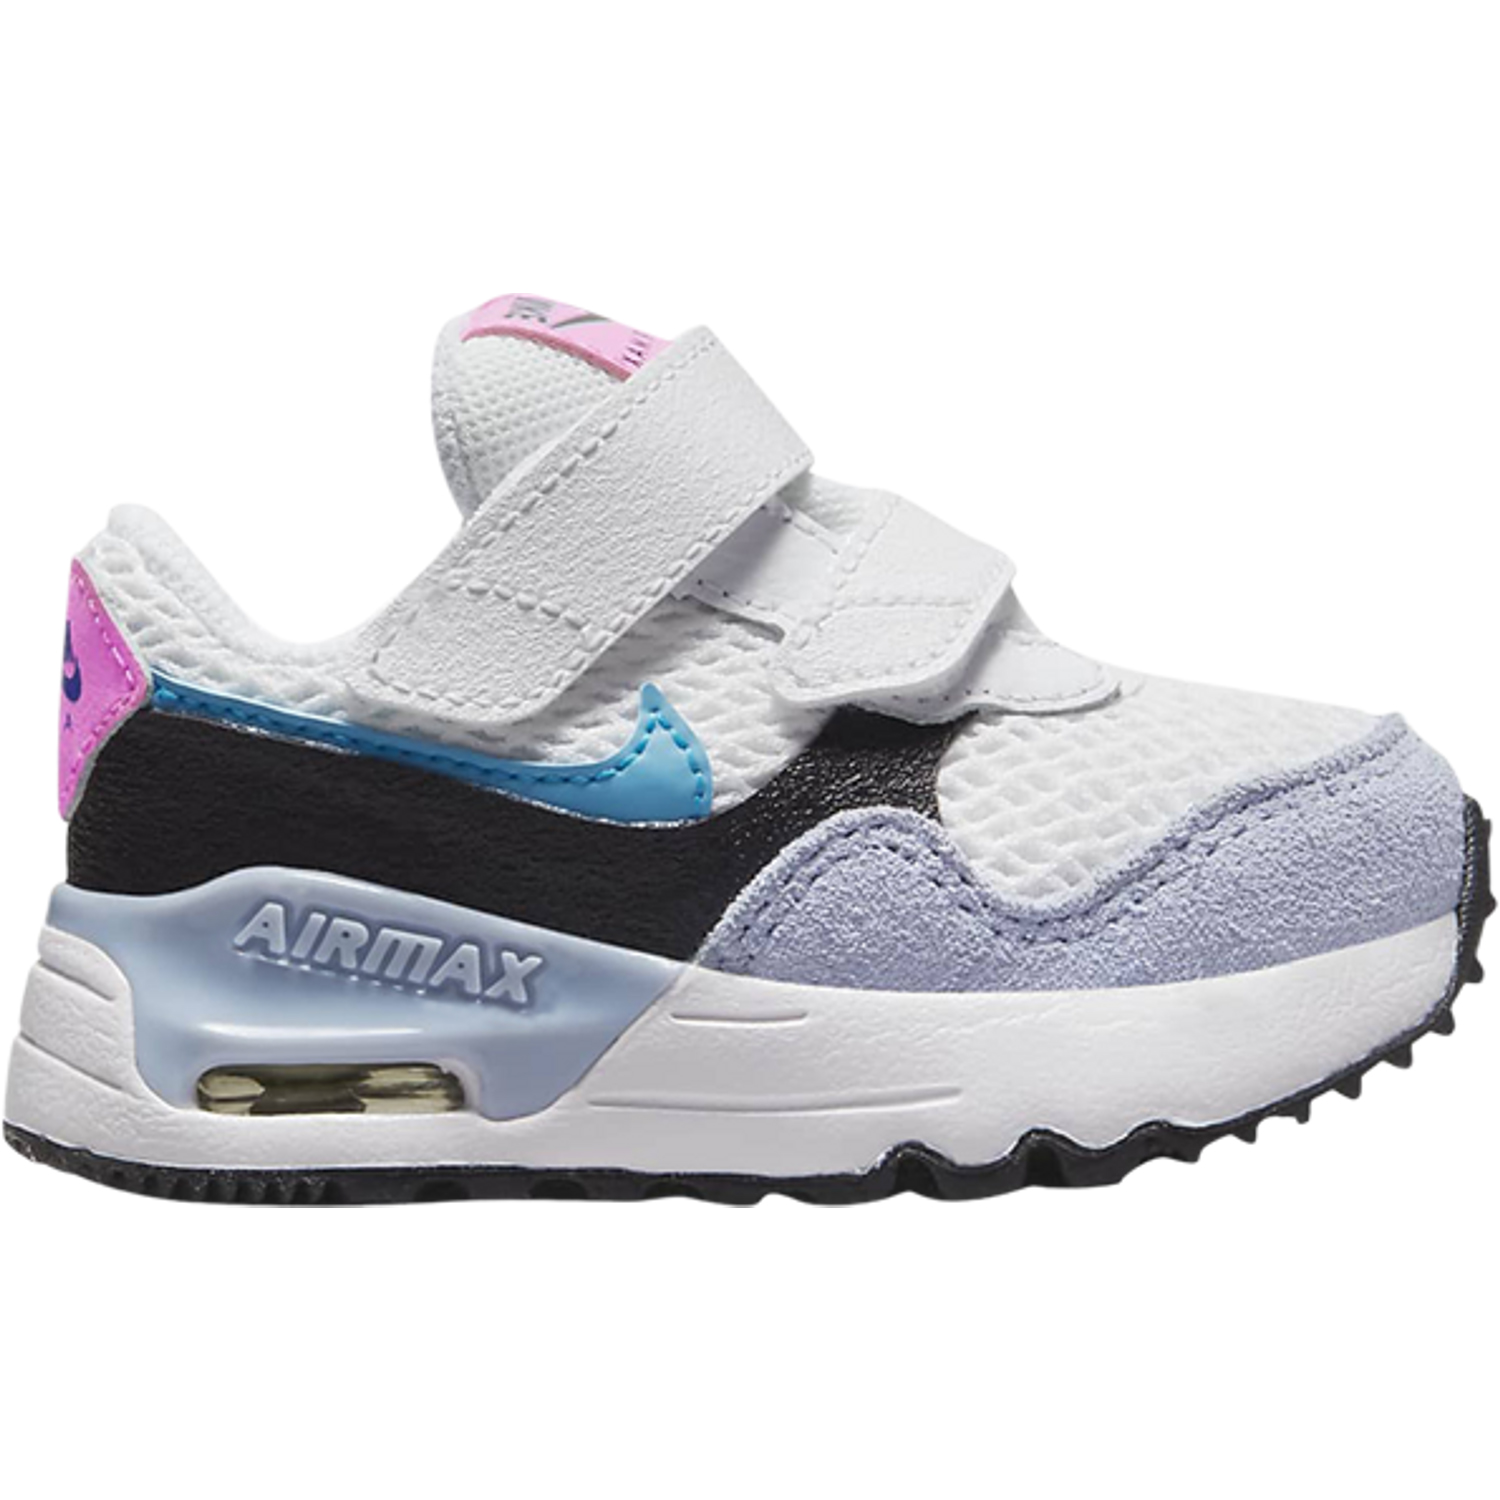 Кроссовки для малышей Nike Air Max Systm TD, разноцветный кроссовки nike air max systm wolf grey aqua blue dm9537 006 серый